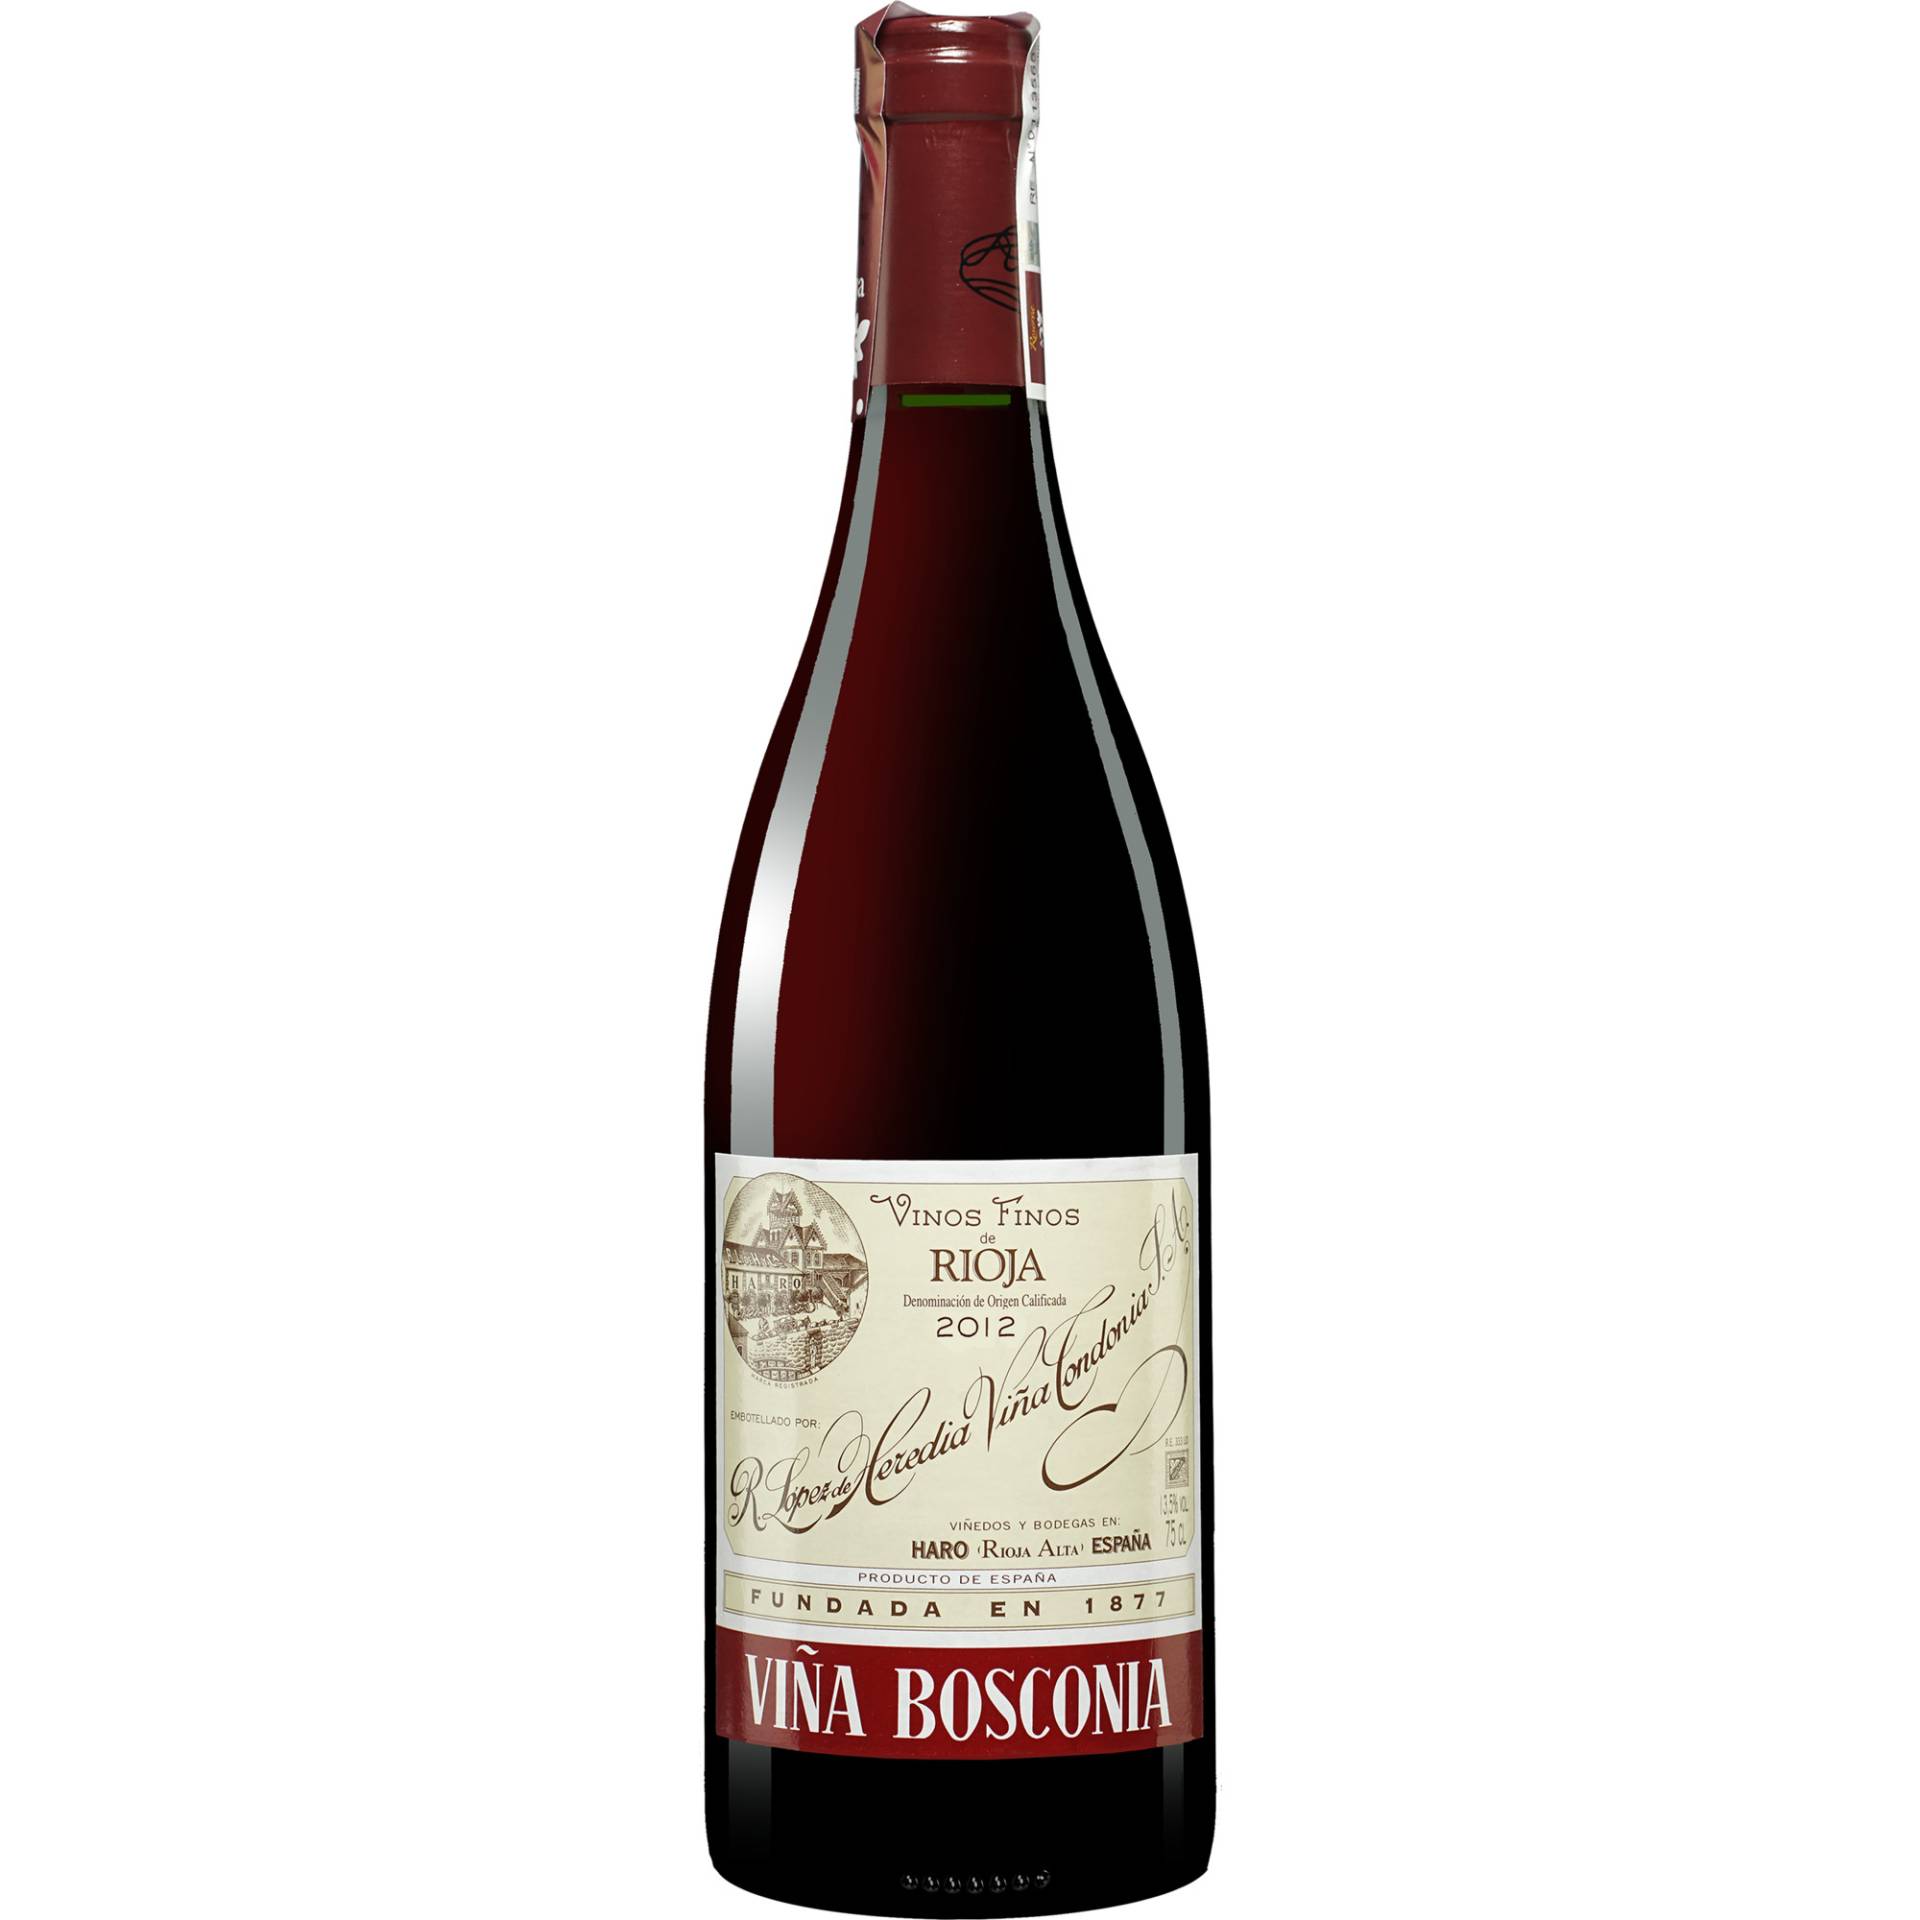 Tondonia »Viña Bosconia« Tinto Reserva 2012  0.75L 13.5% Vol. Rotwein Trocken aus Spanien von López de Heredia - Viña Tondonia